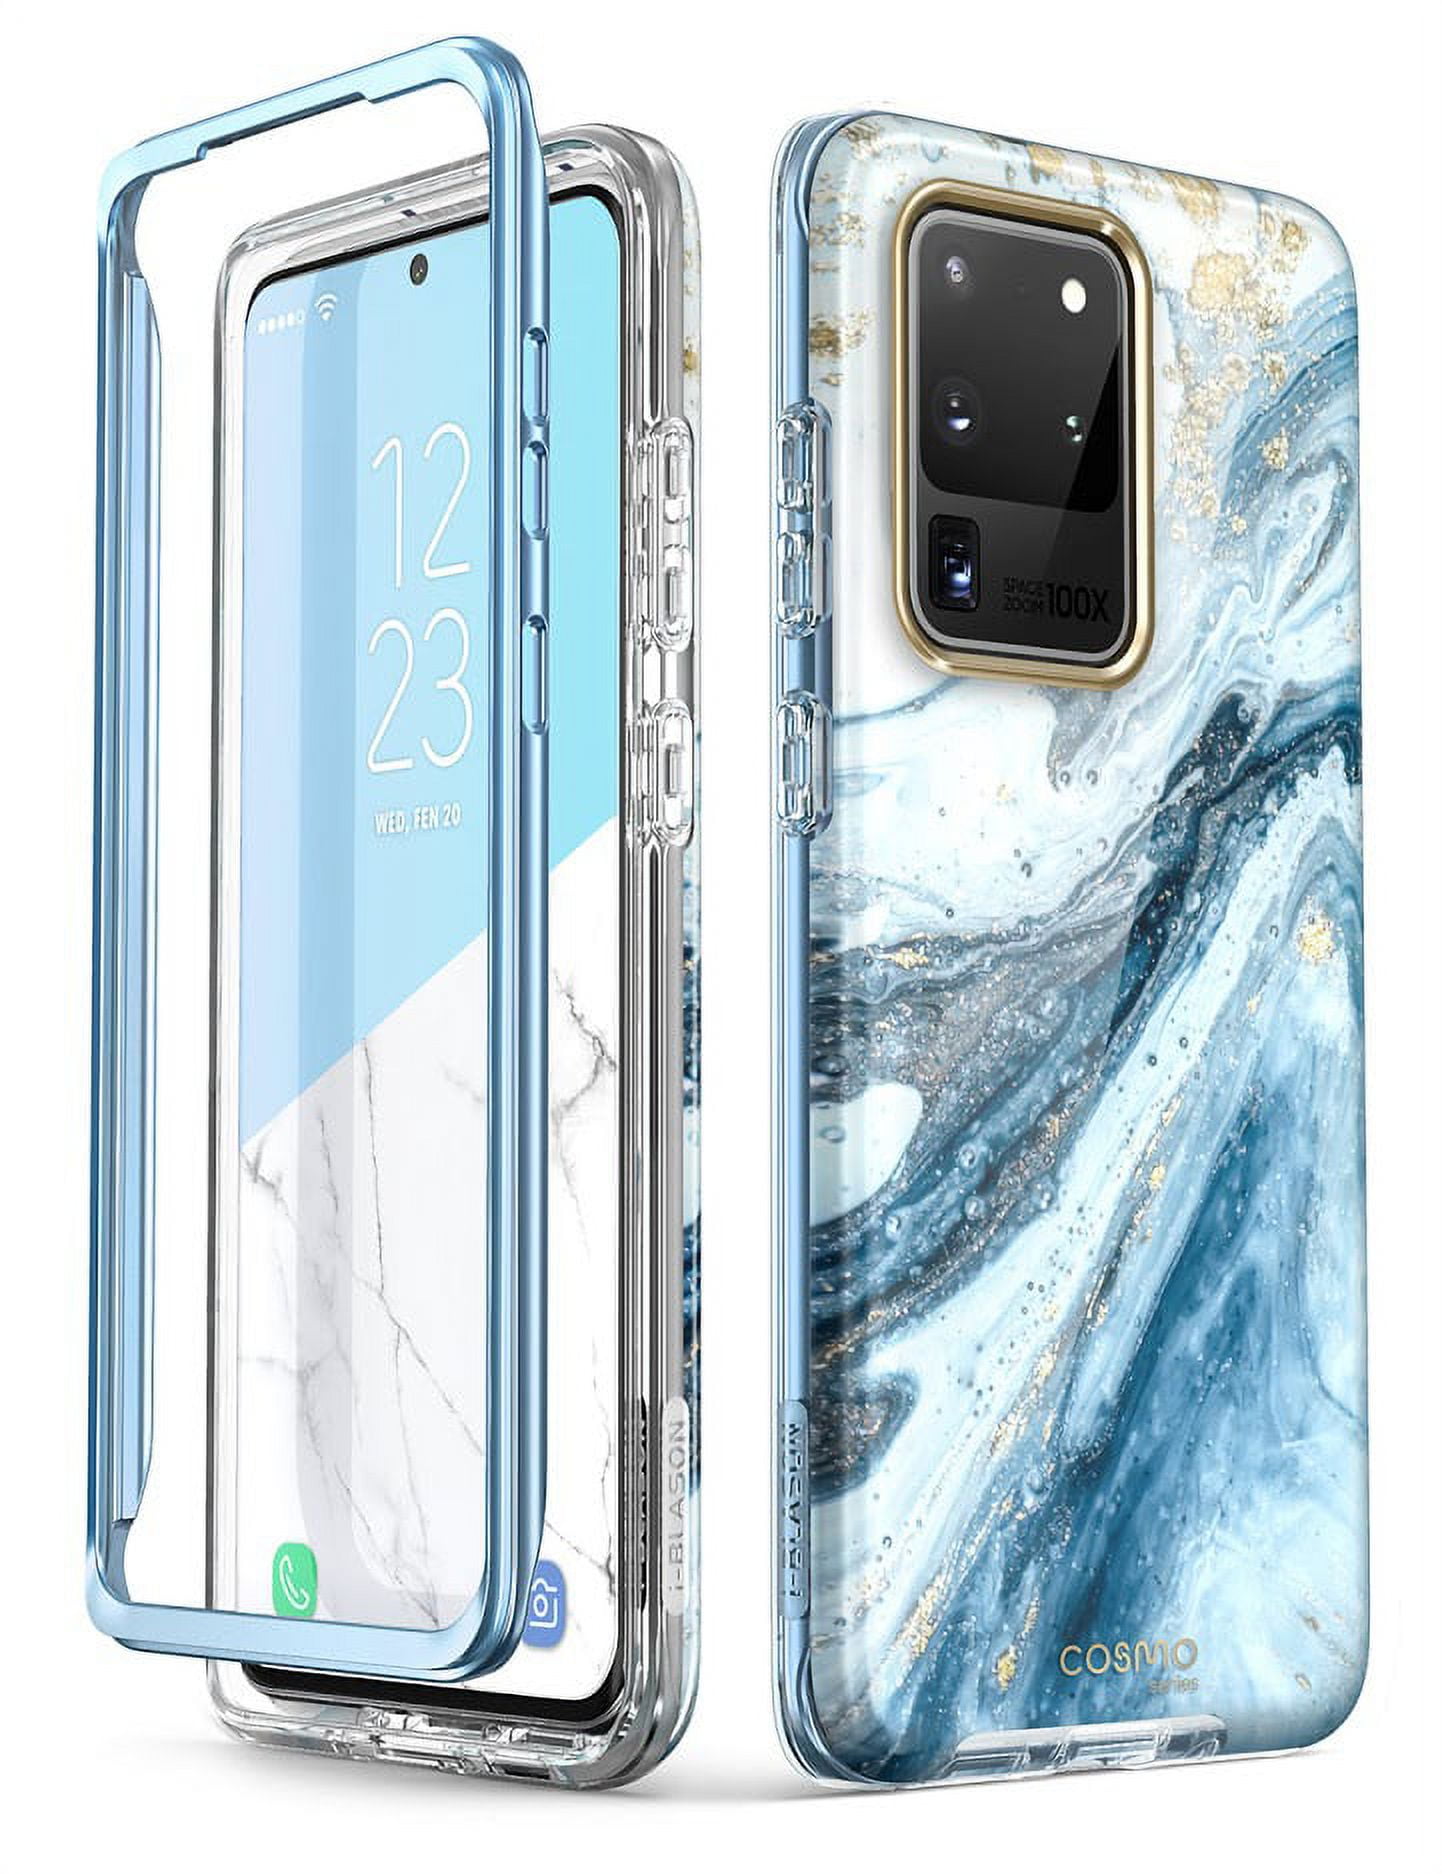 Samsung Galaxy S20 Ultra 5g Case Protection - Samsung Galaxy S20